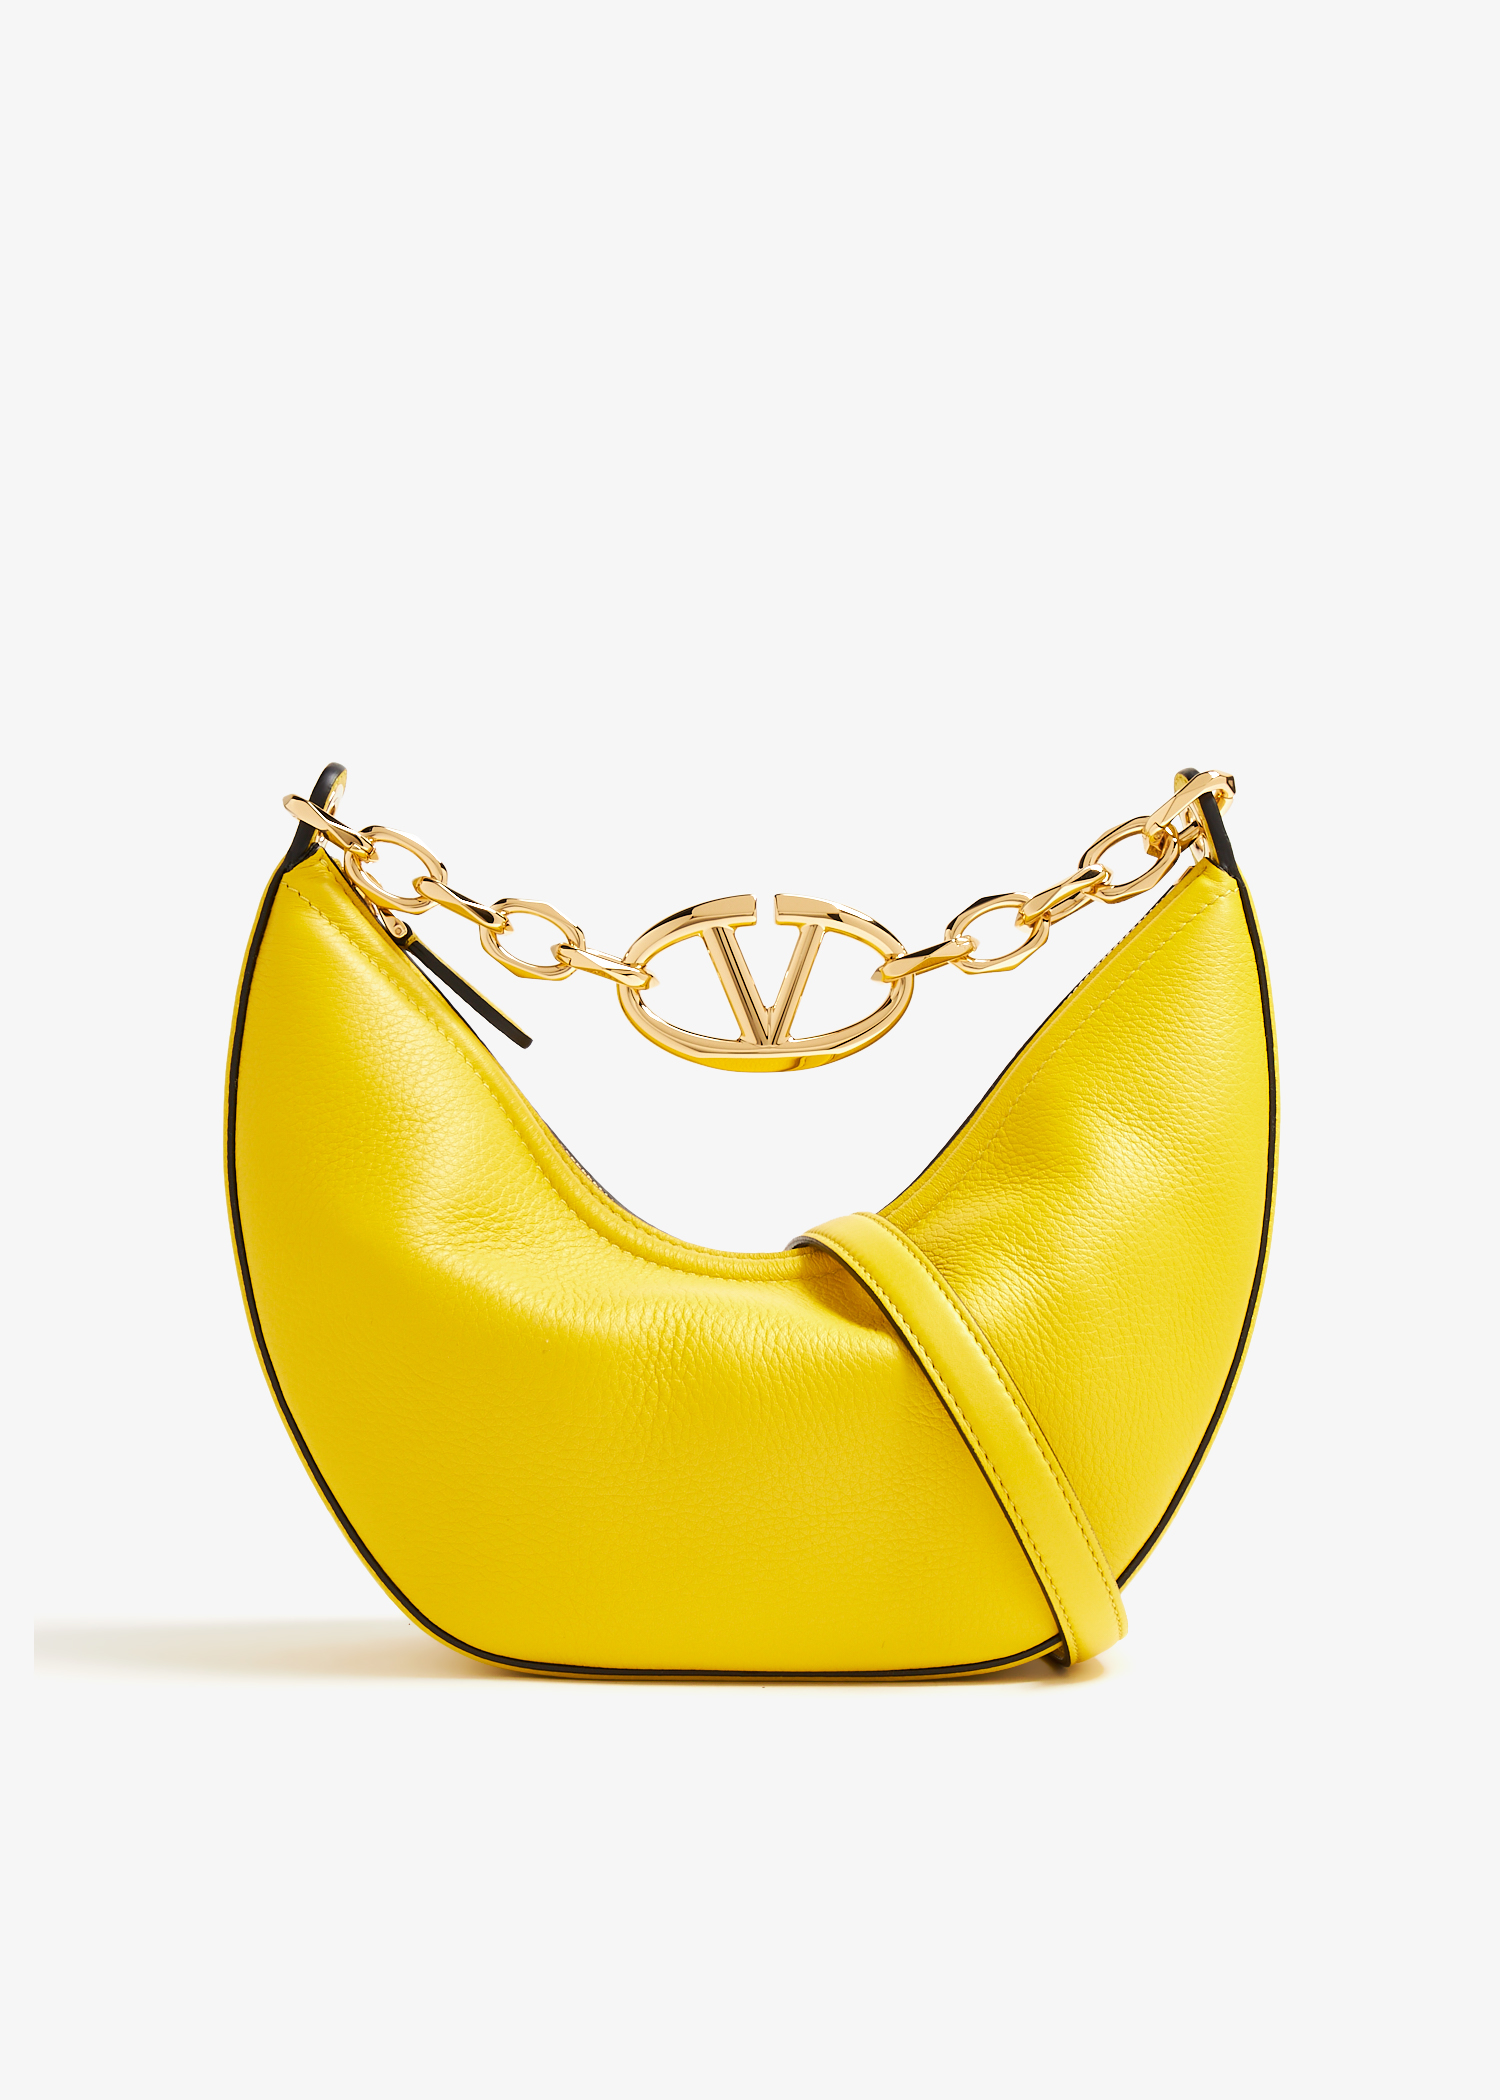 Valentino Garavani VLogo Moon shoulder bag for Women - Yellow in 